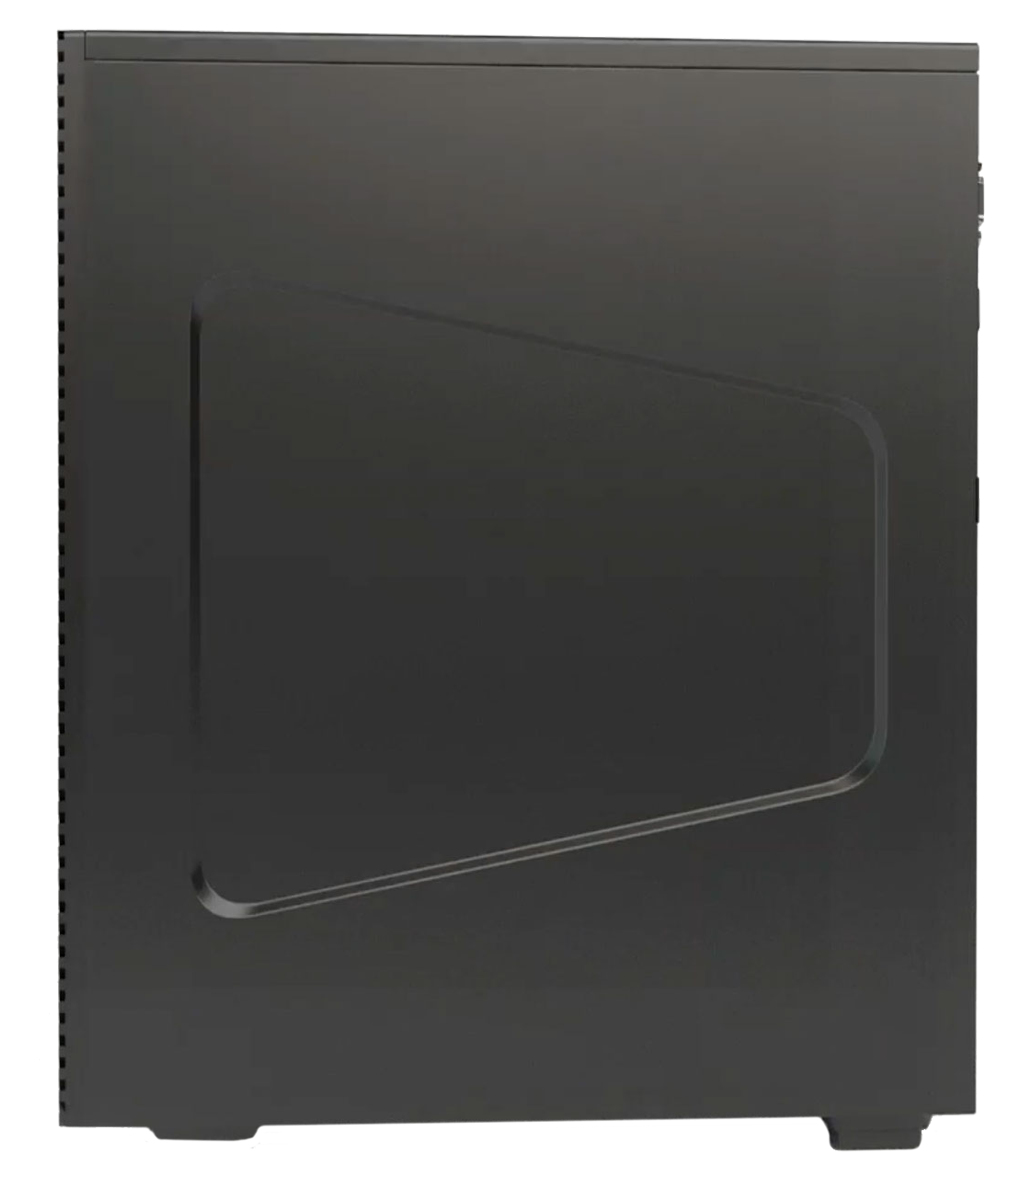 CASE ITEK SMALLCOM-G 500W BLACK USB 3.0 m-ATX